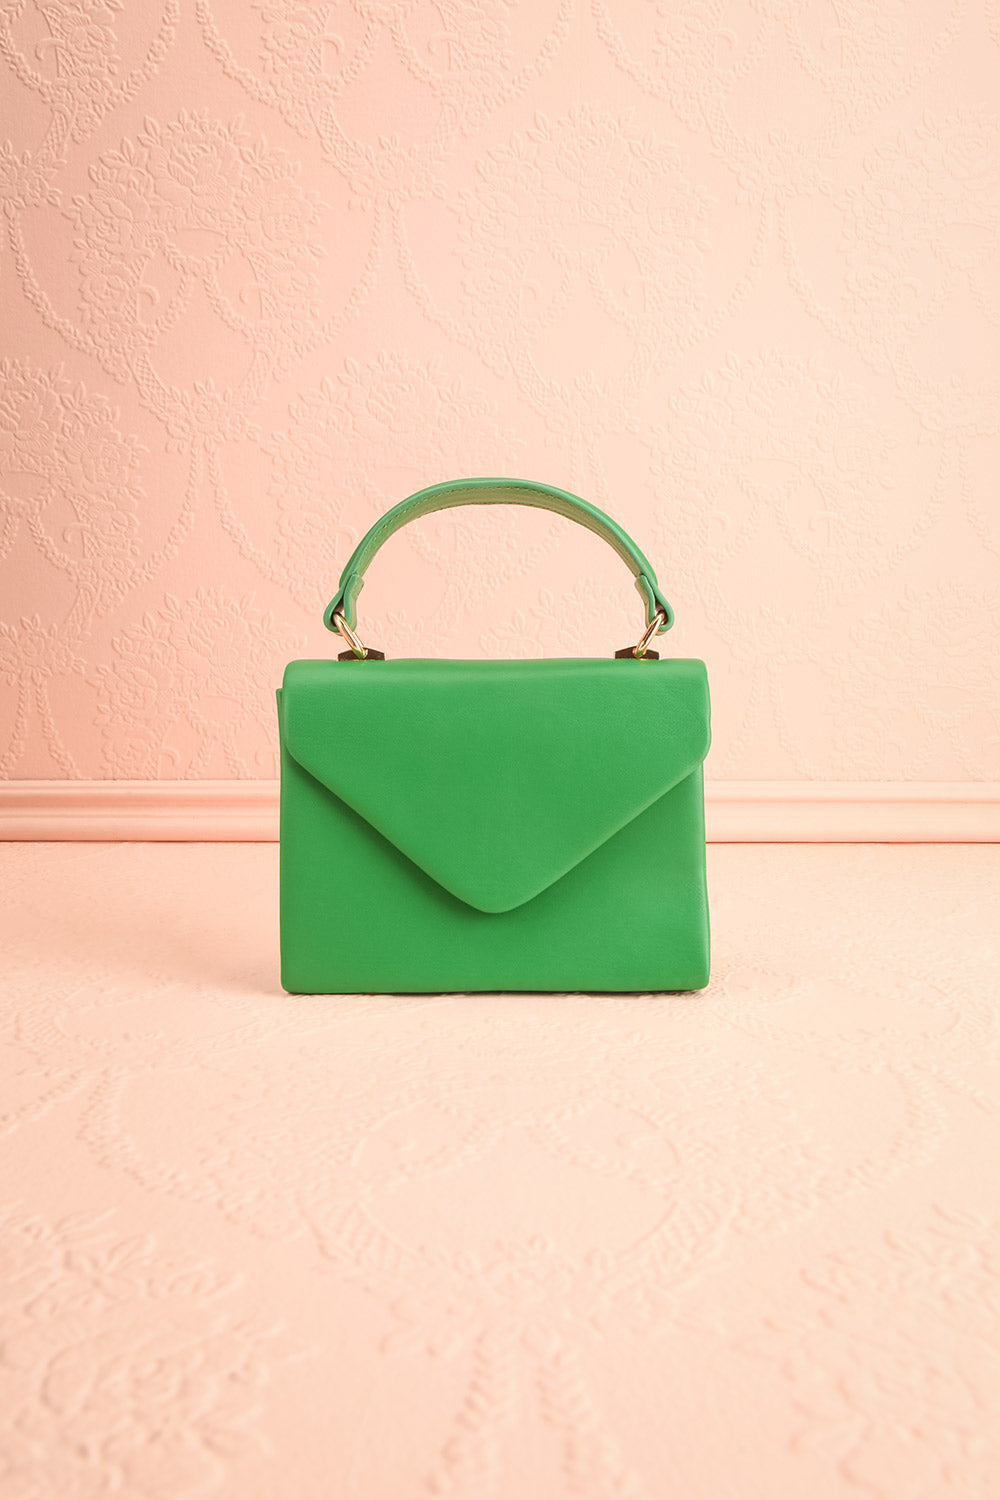 Slovia Green Small Handbag w/ Removable Chain Strap | Boutique 1861 front view